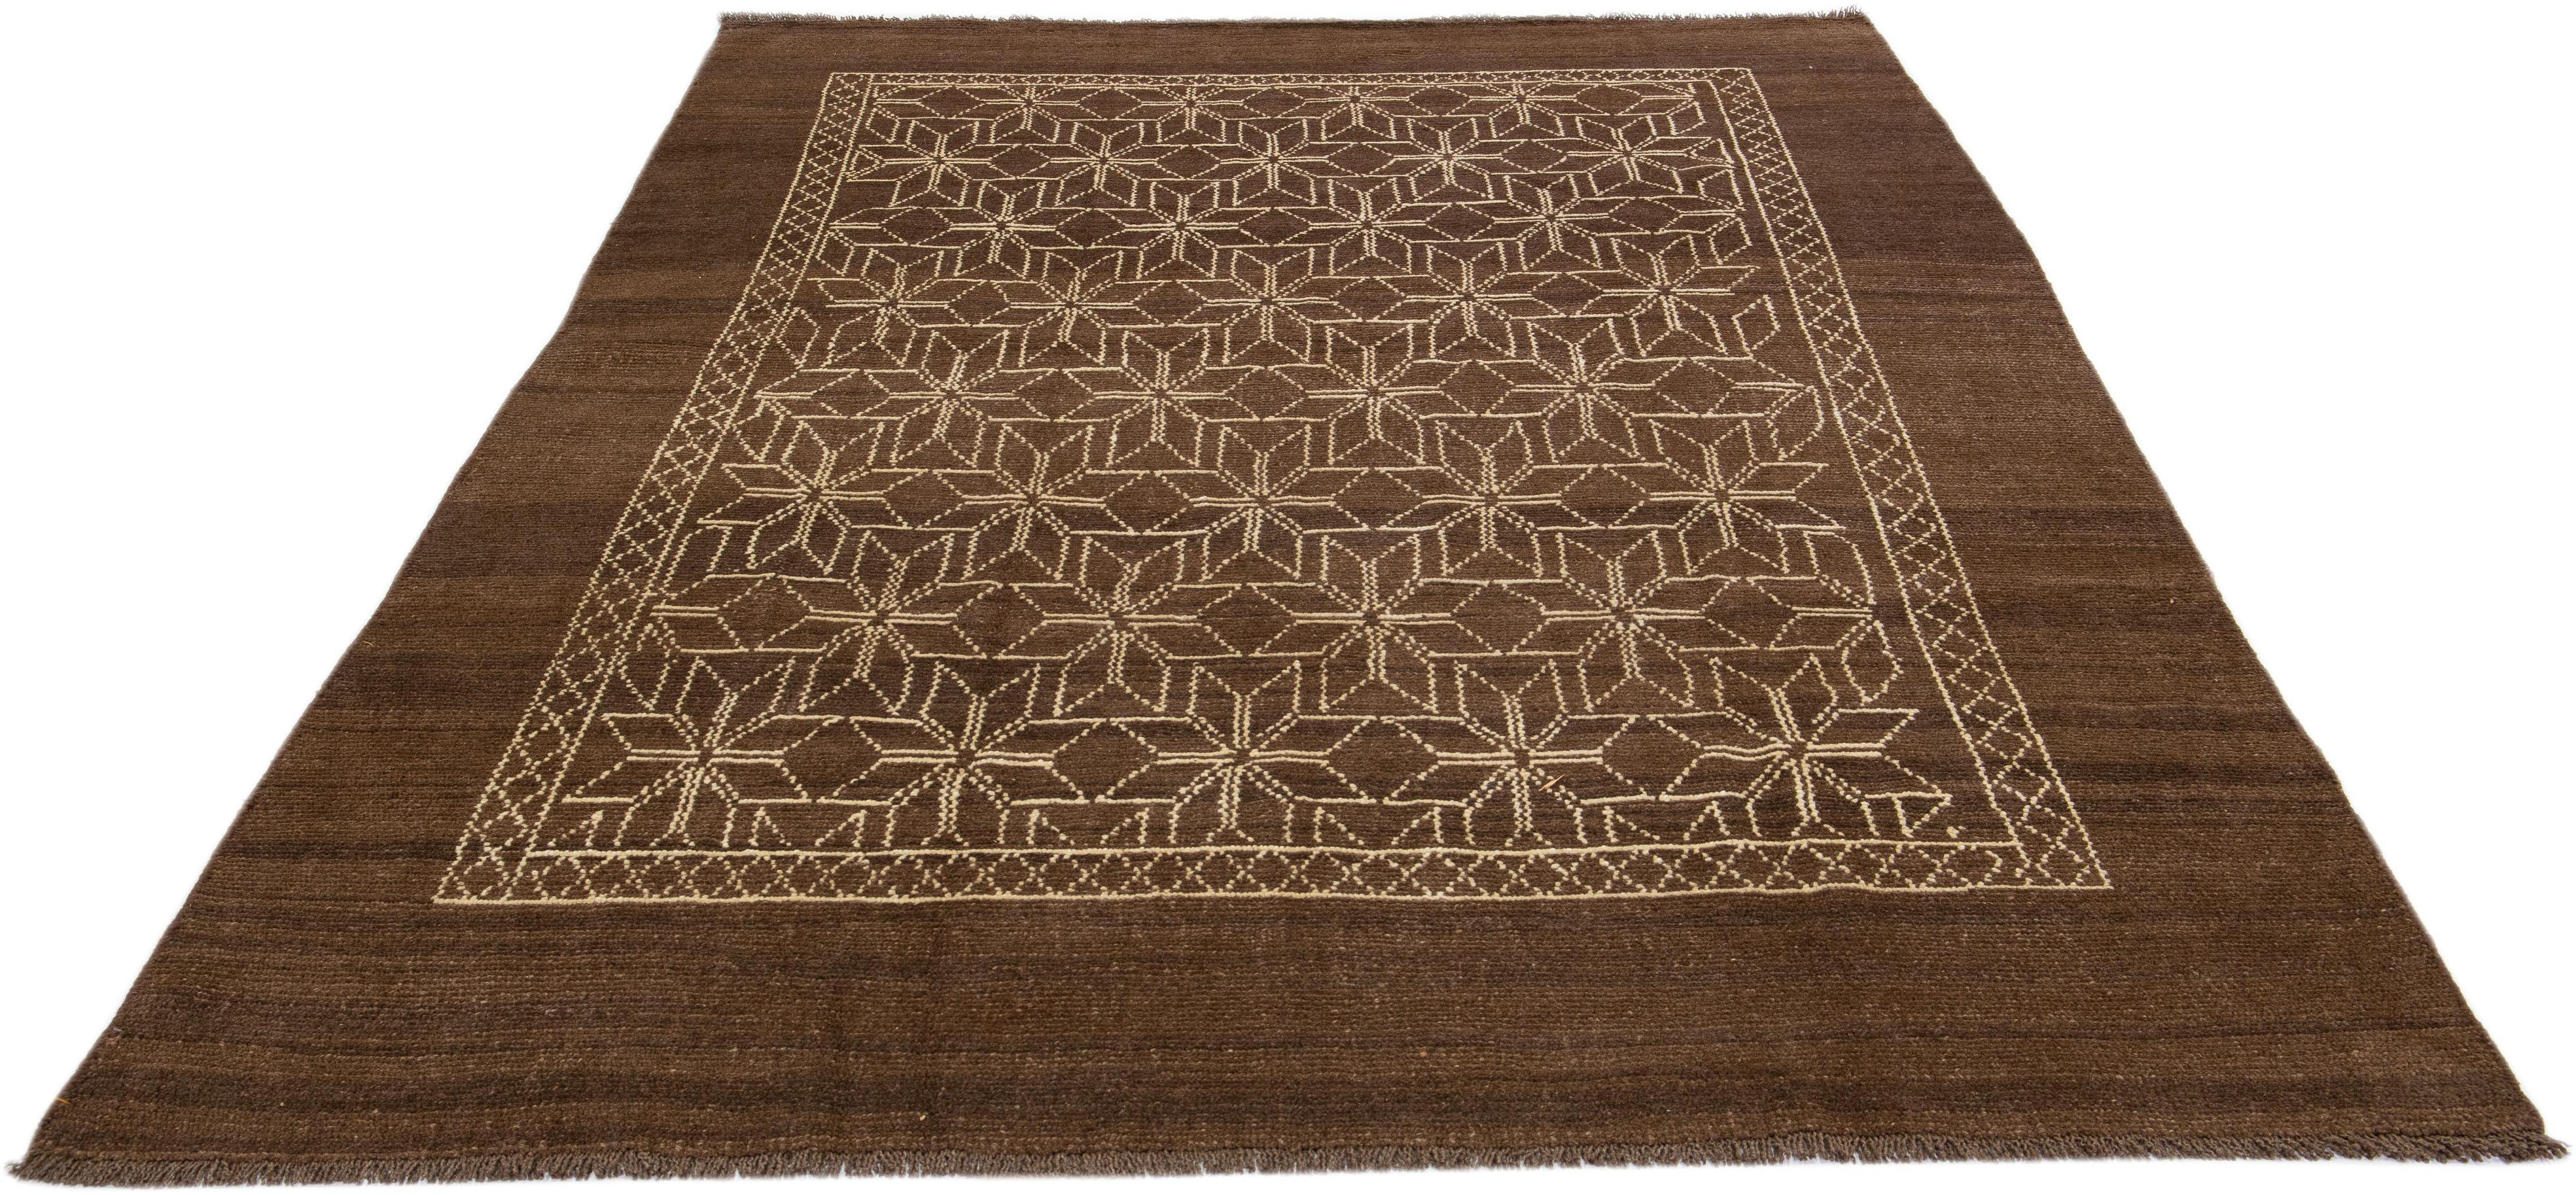 Afghan Brown Modern Moroccan Style Handmade Geometric Designed Wool Rug by Apadana For Sale